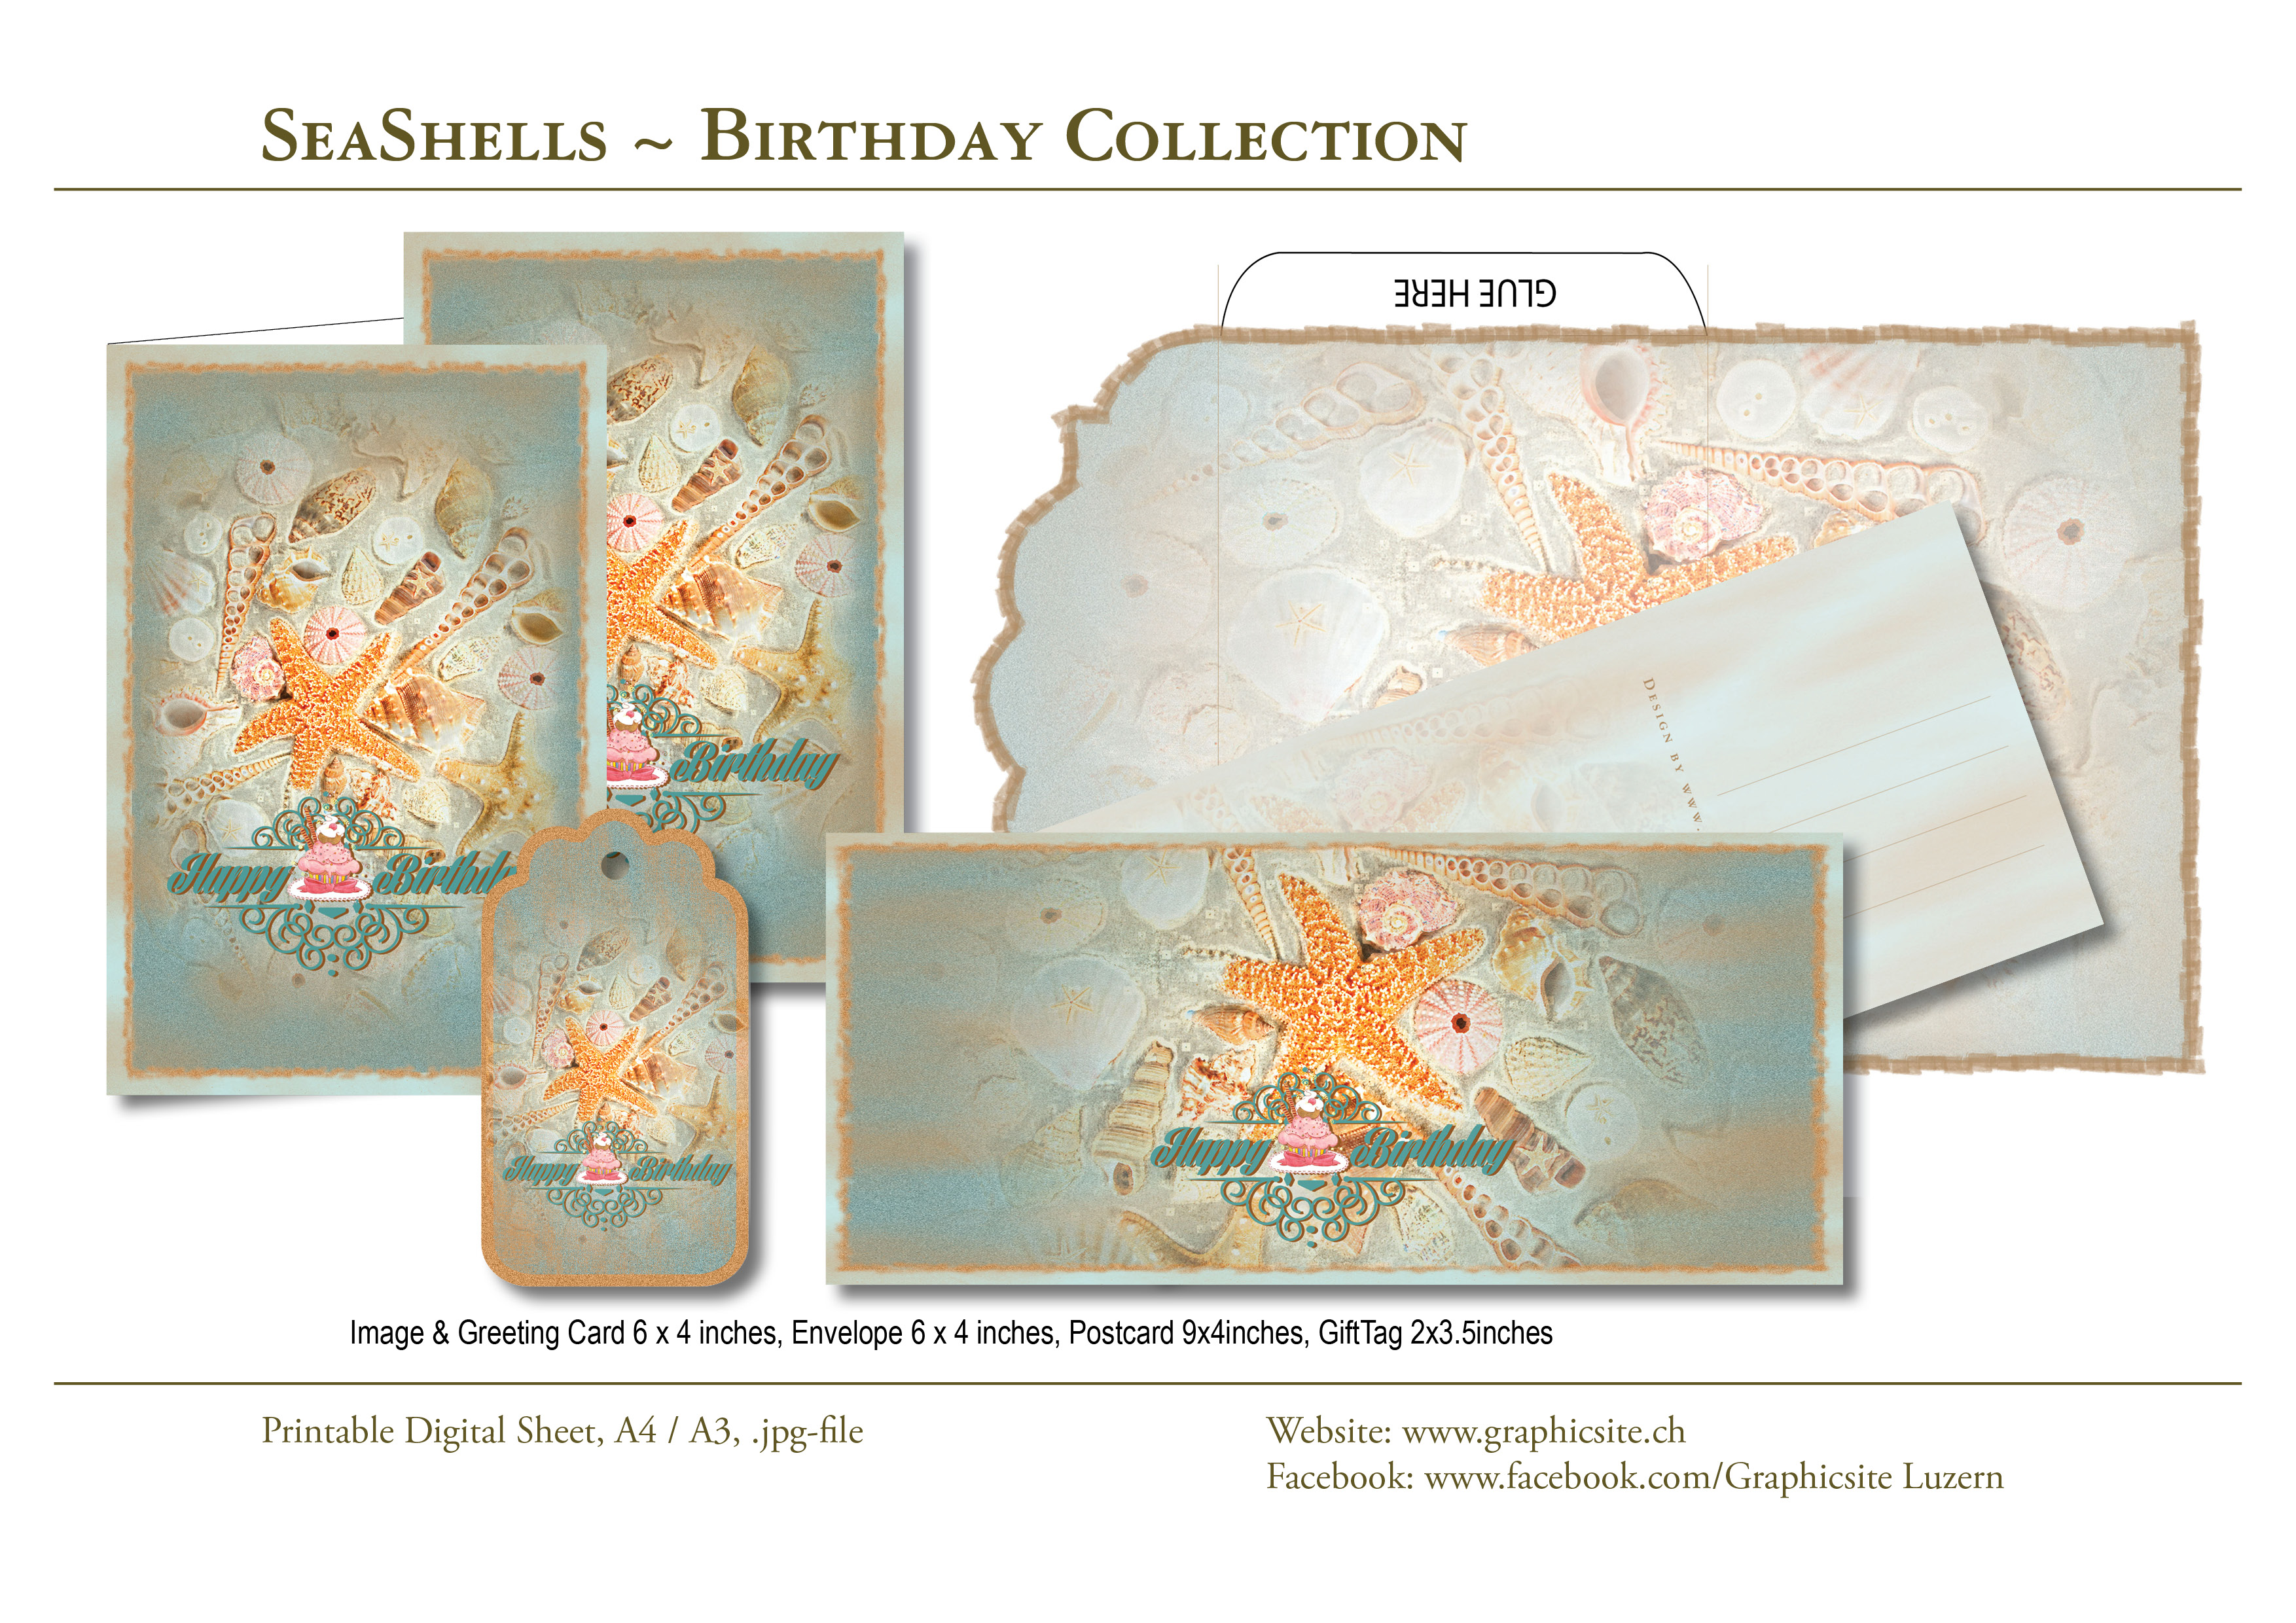 Karten selber basteln - Geburtstagskollektion - SeaShells - #geburtstagskarten, #grusskarten, #muscheln, #postkarten, #geschenksetiketten, #kuvert,